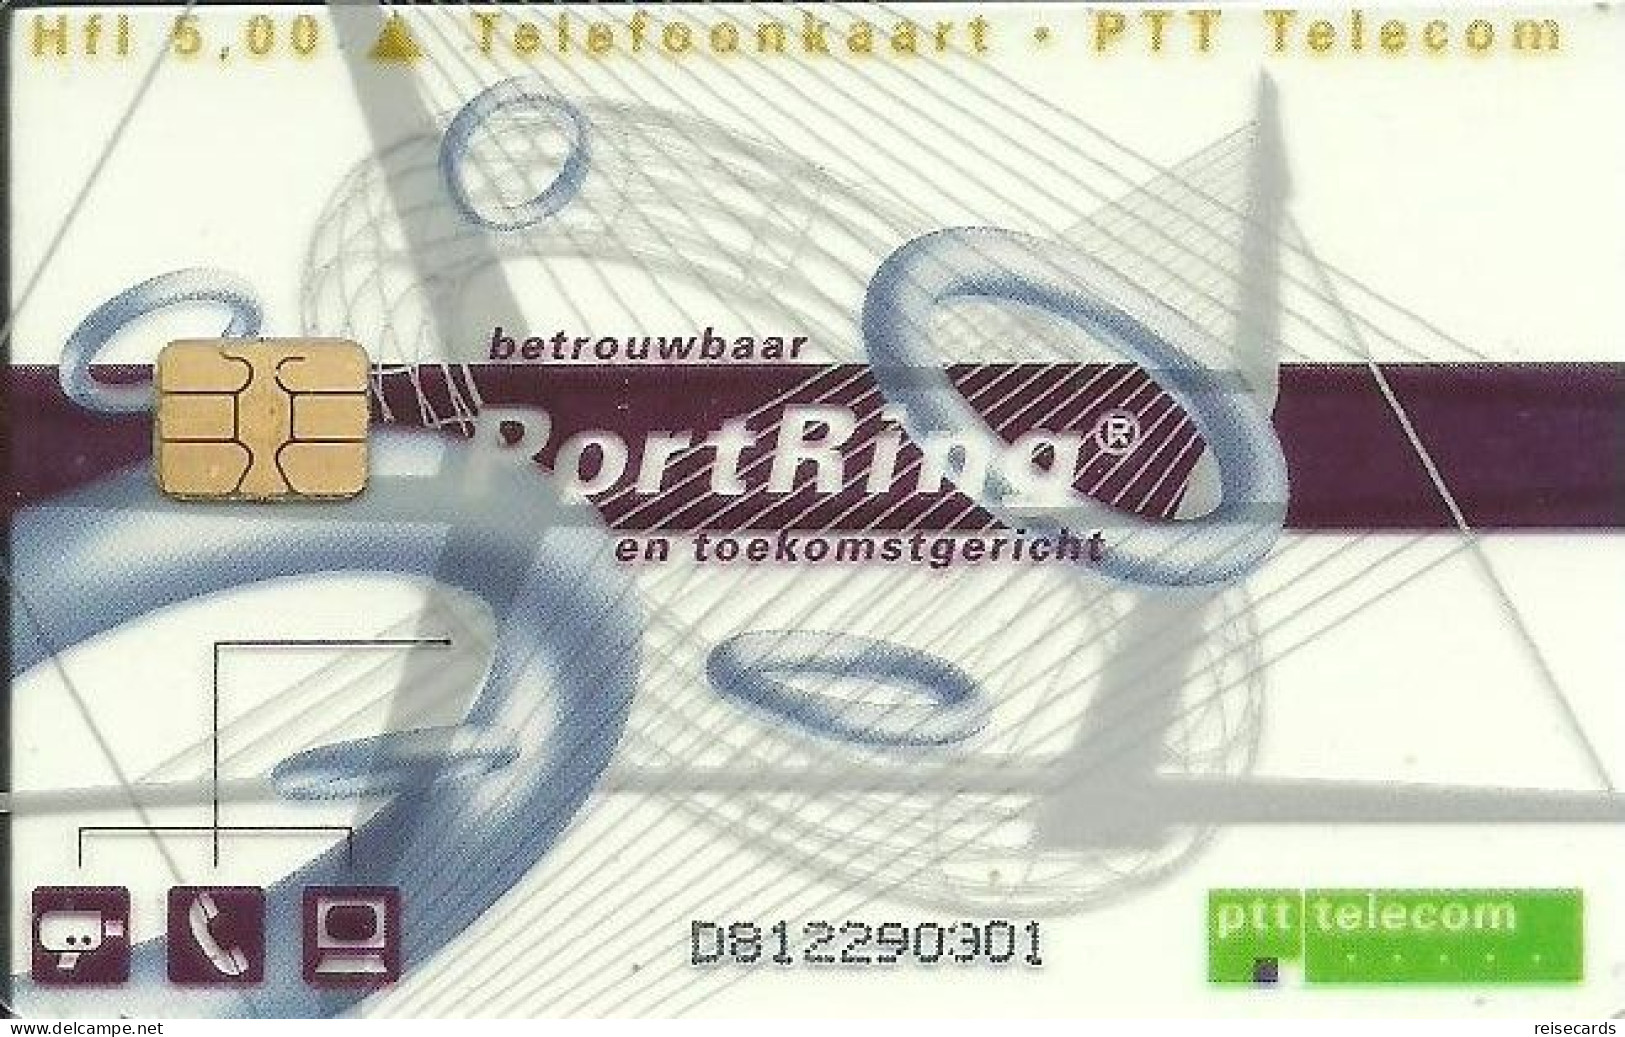 Netherlands: Ptt Telecom - 1997 PortRing. Mint, Transparent - Publiques